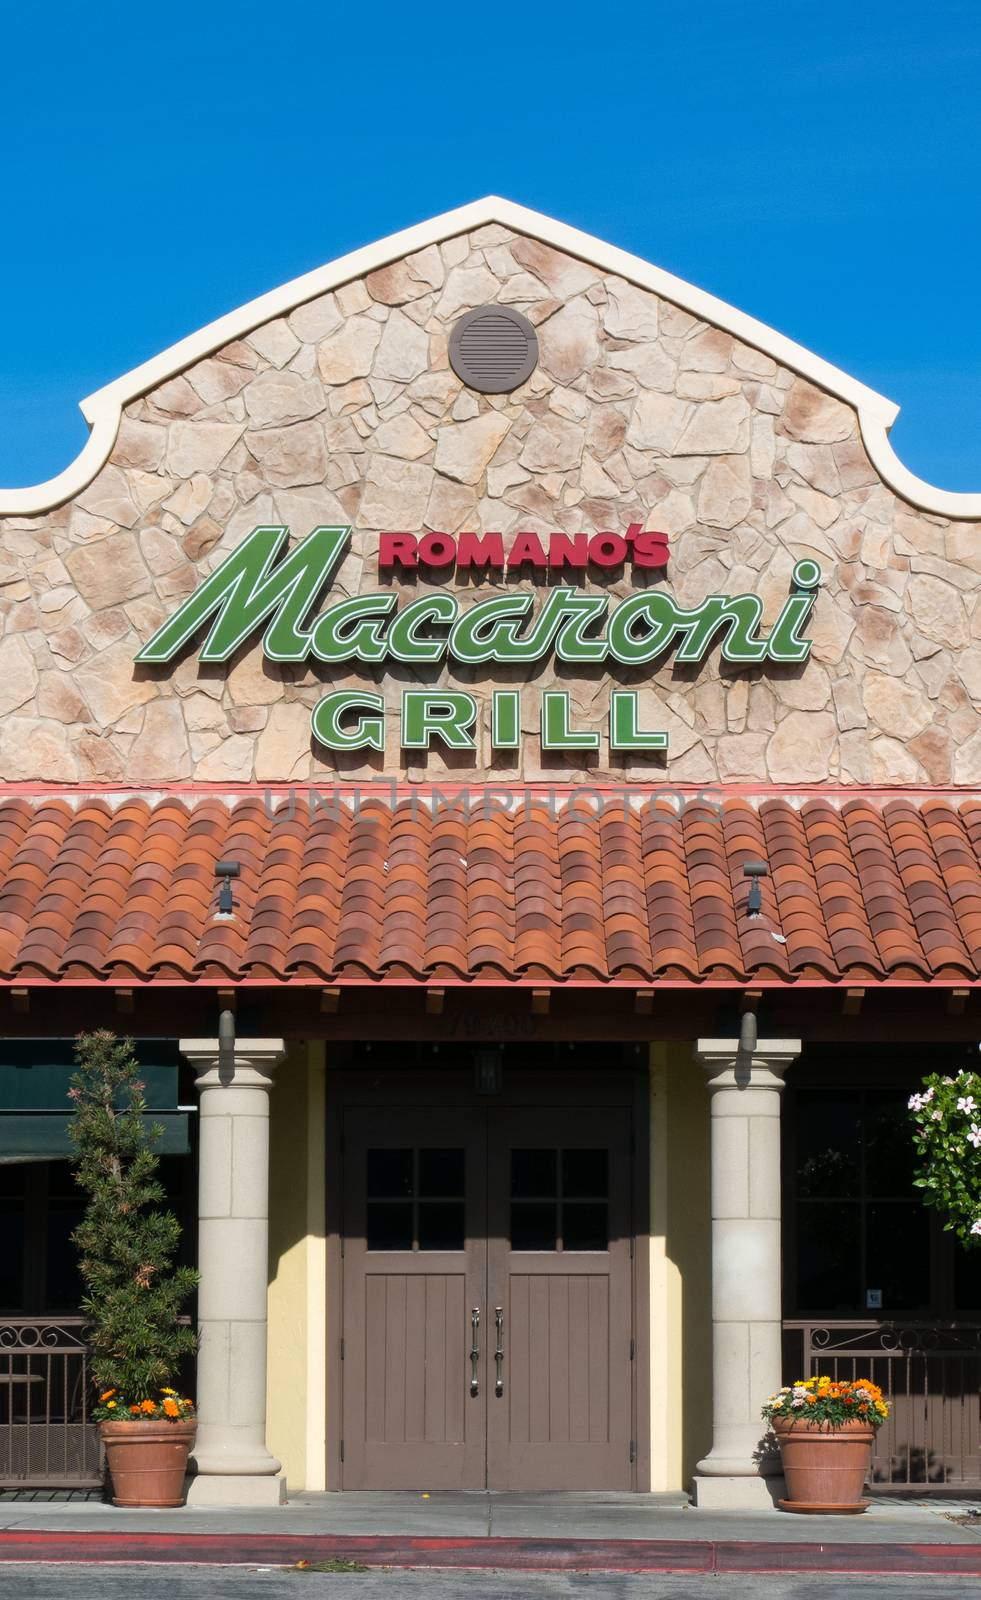 NORTHRIDGE, CA/USA - NOVEMBER 24, 2014: Romano's Macaroni Grill exterior. Romano's Macaroni Grill is a casual dining restaurant chain specializing in Italian-American cuisine.